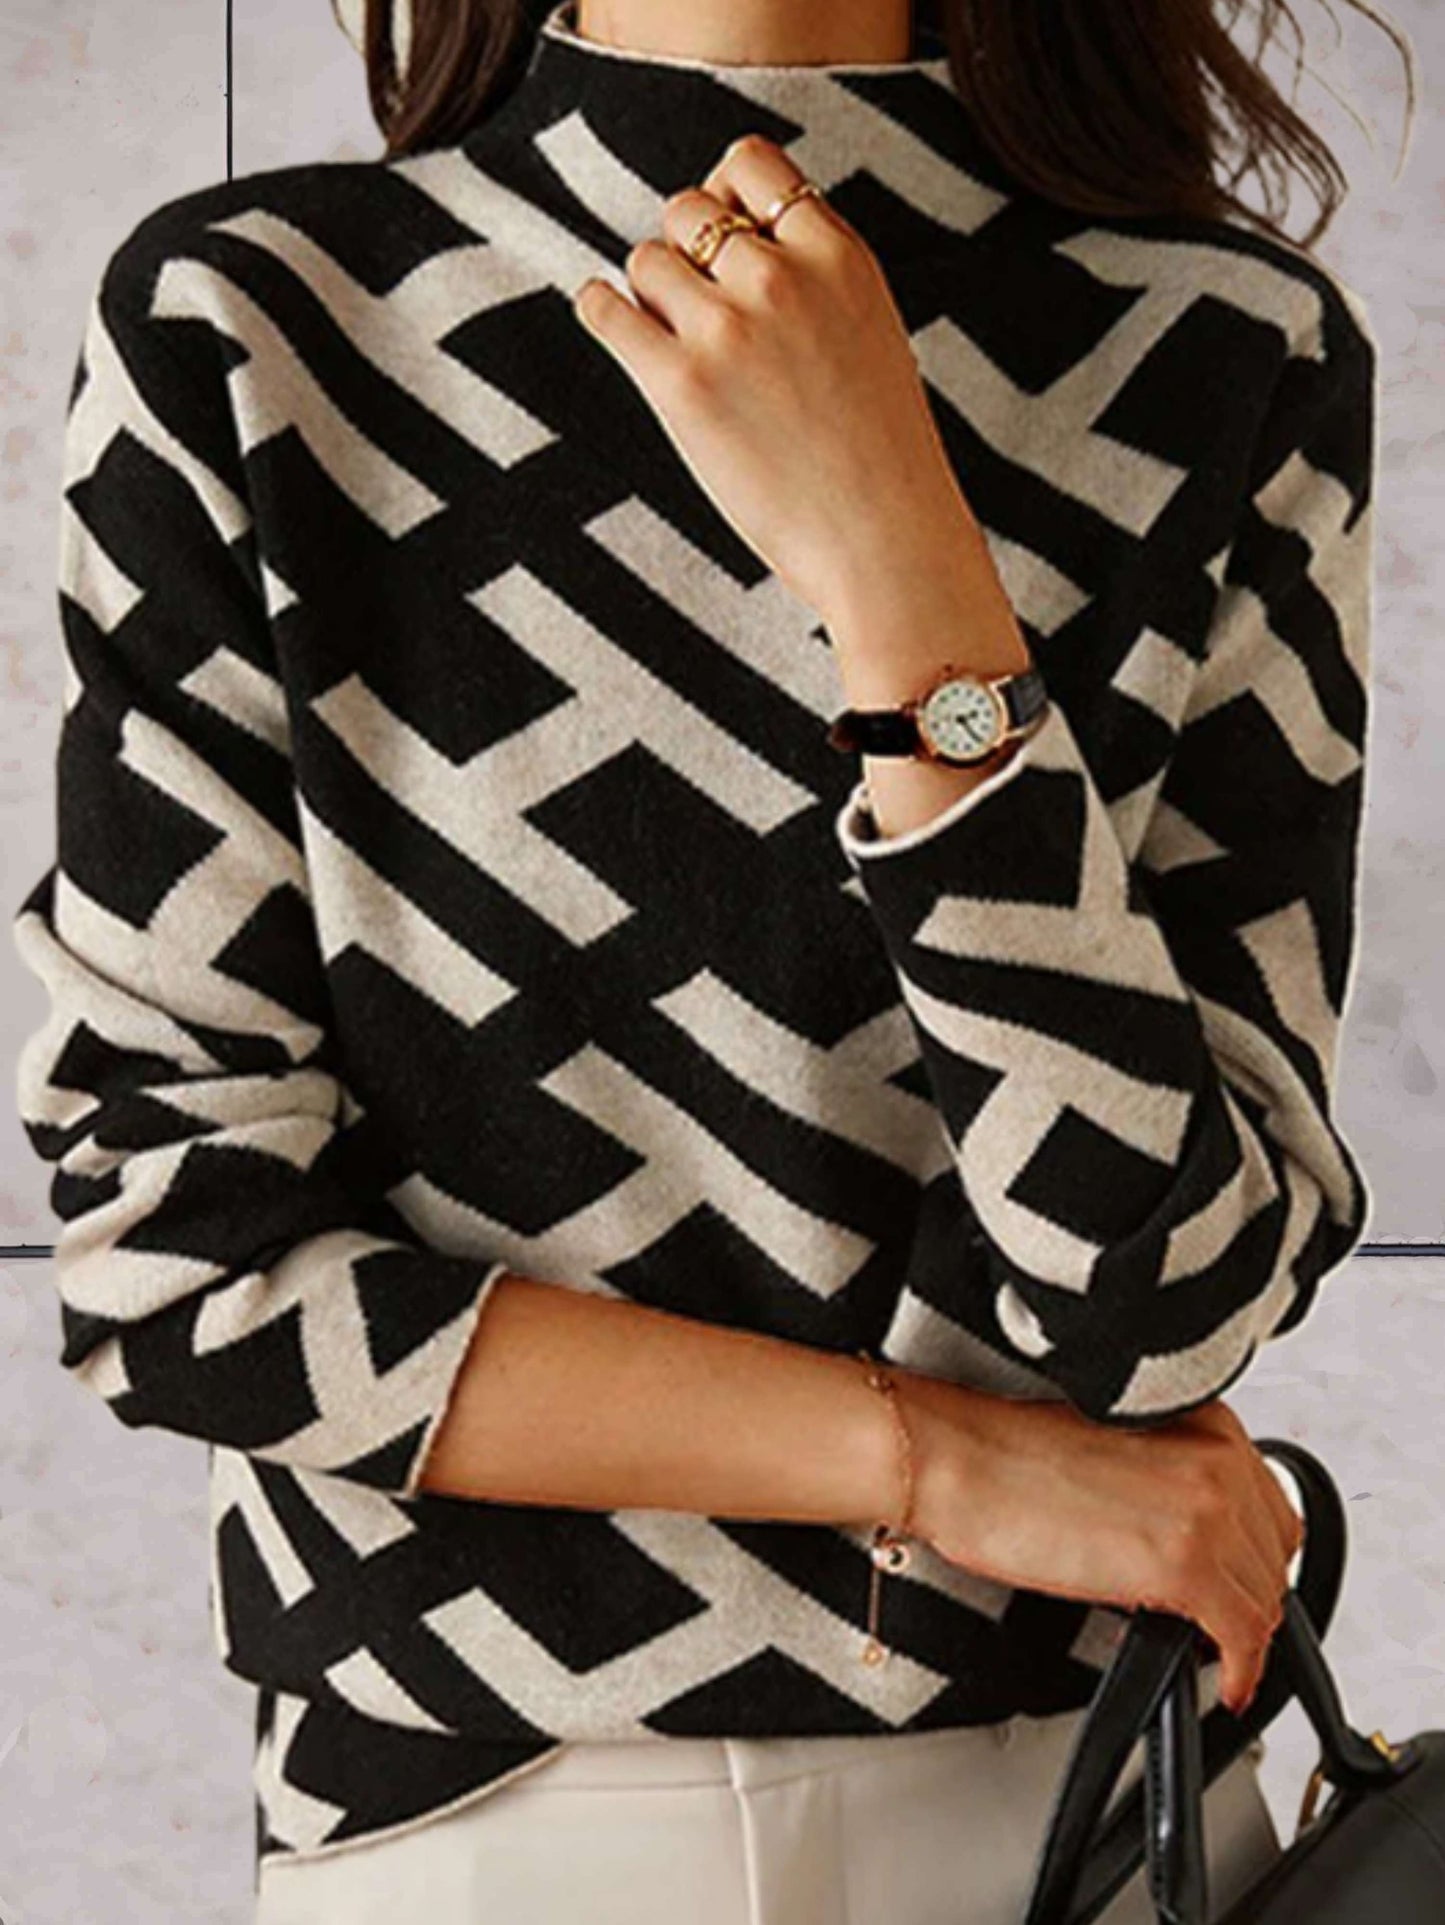 Name - elegante gebreide trui met Frans letterpatroon en hoge halslijn